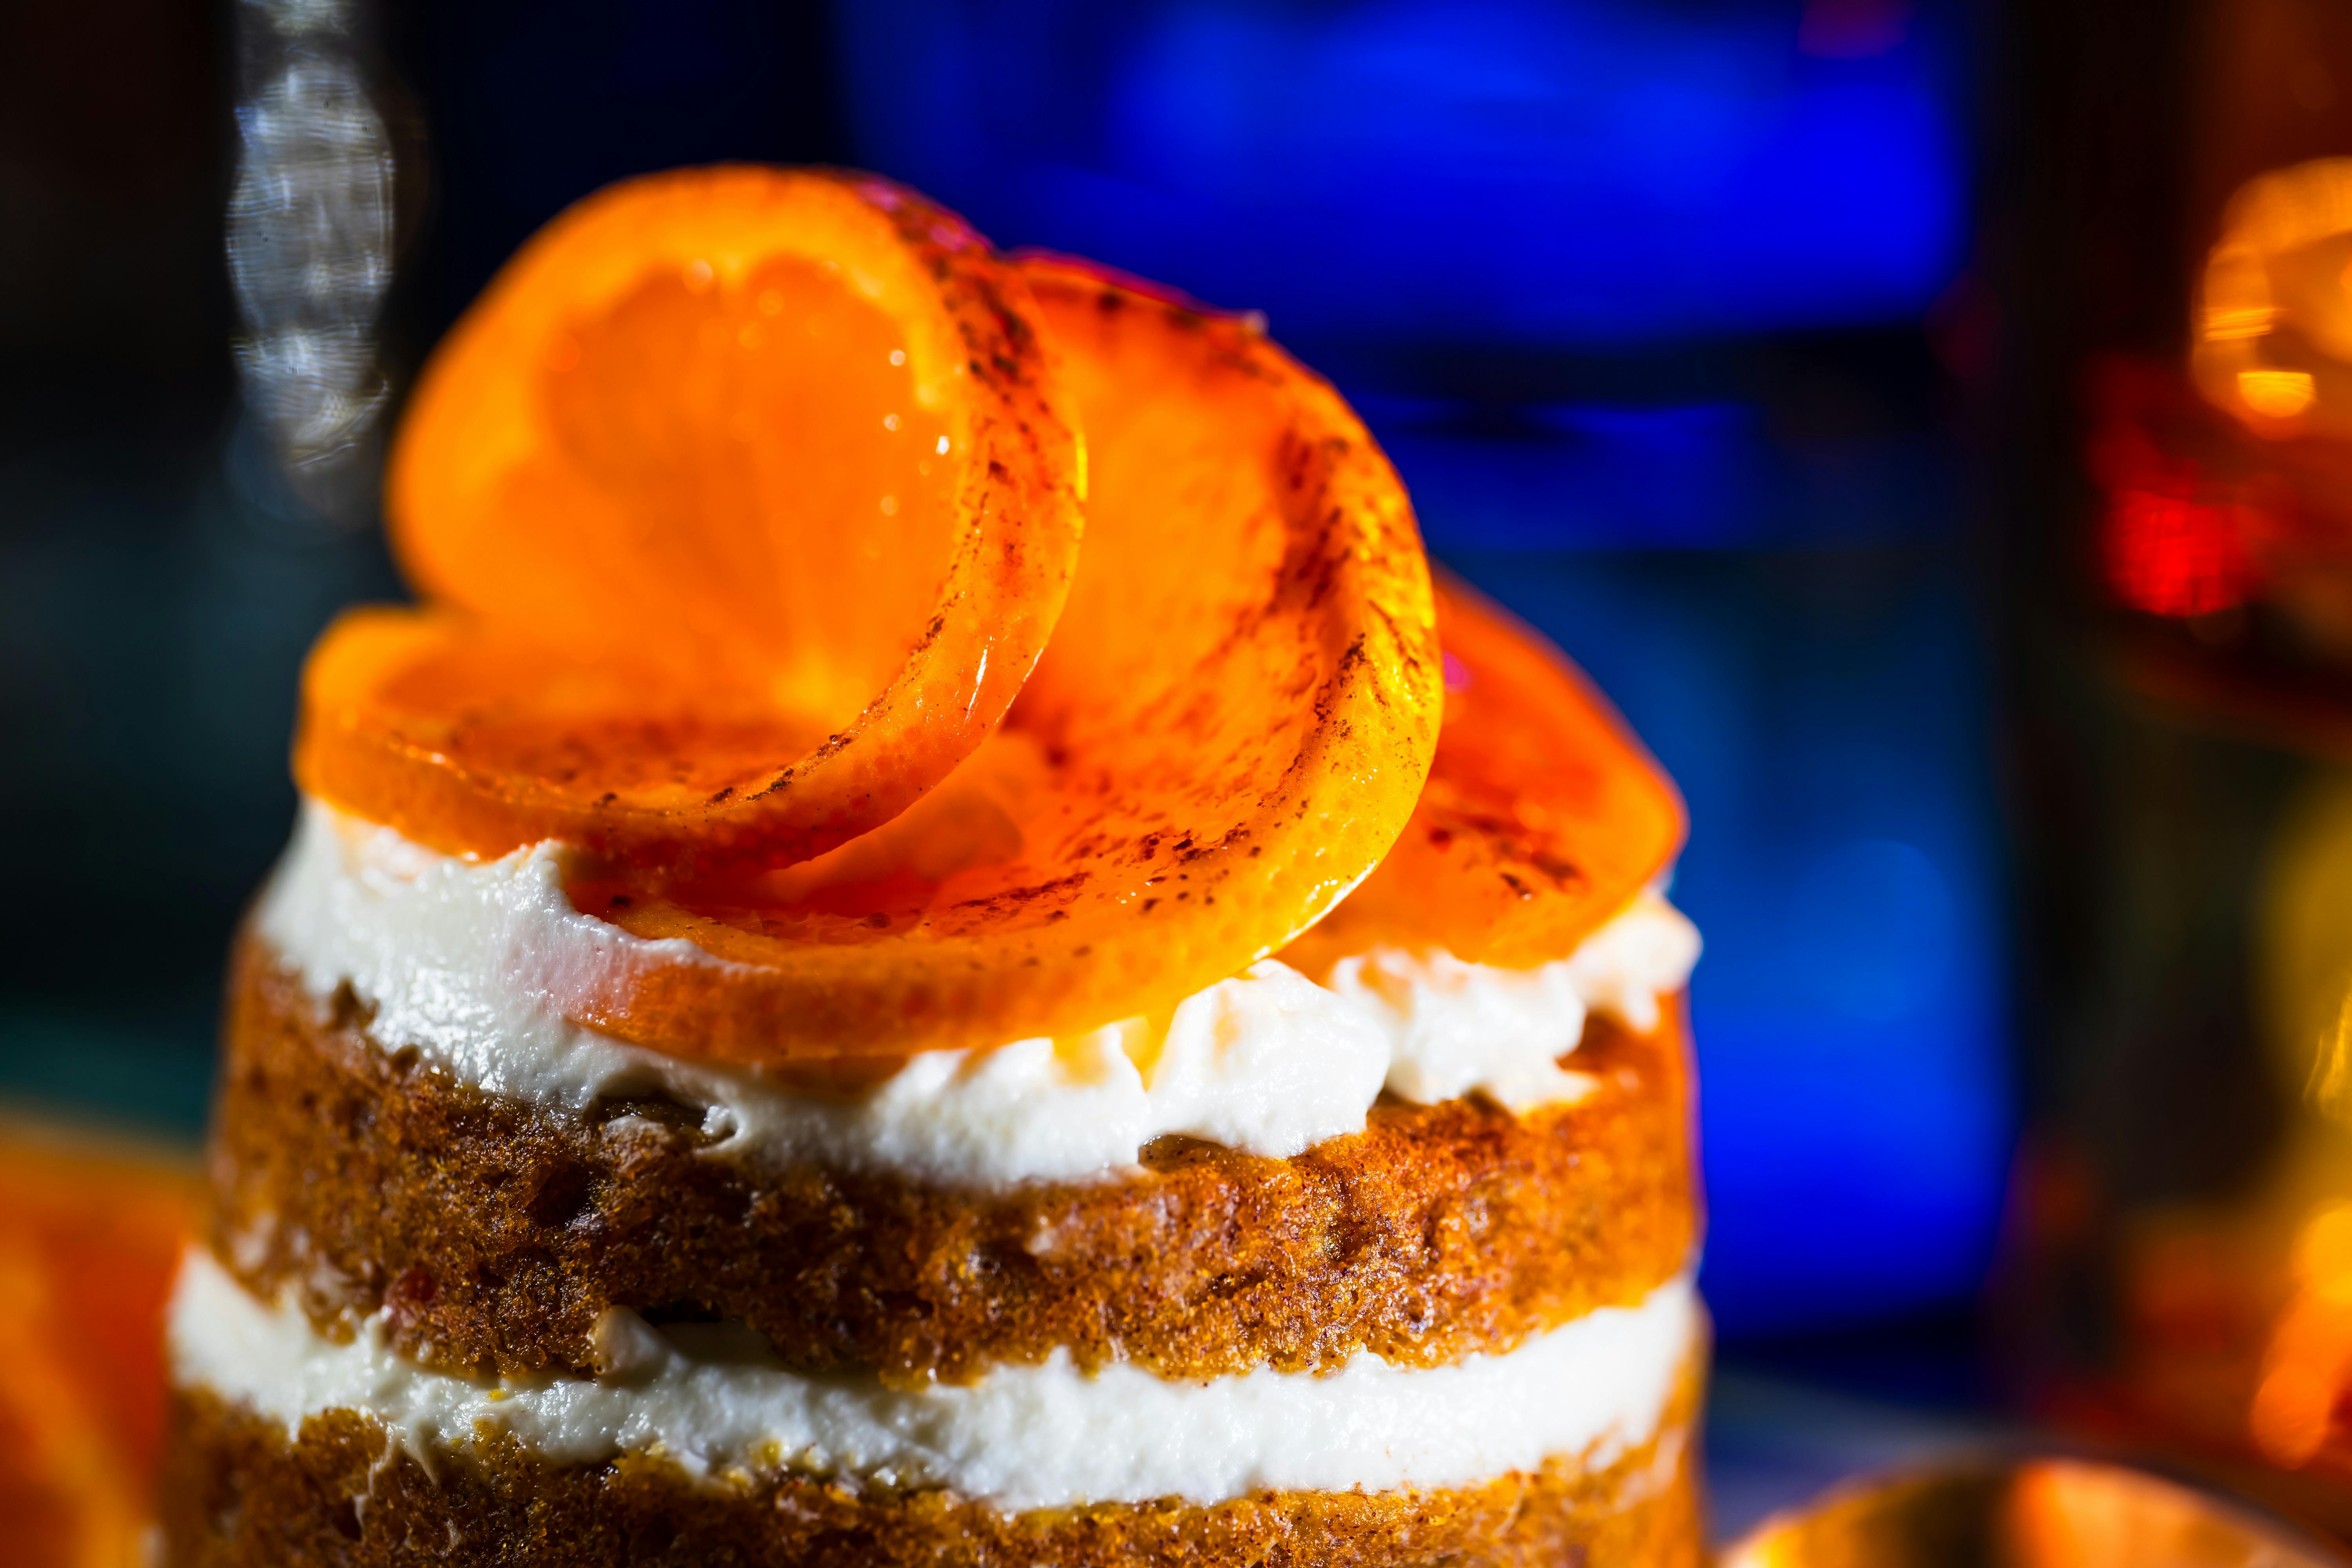 Top 50 Wedding Cake Trends 2023 : Cream puffs and macaron cake